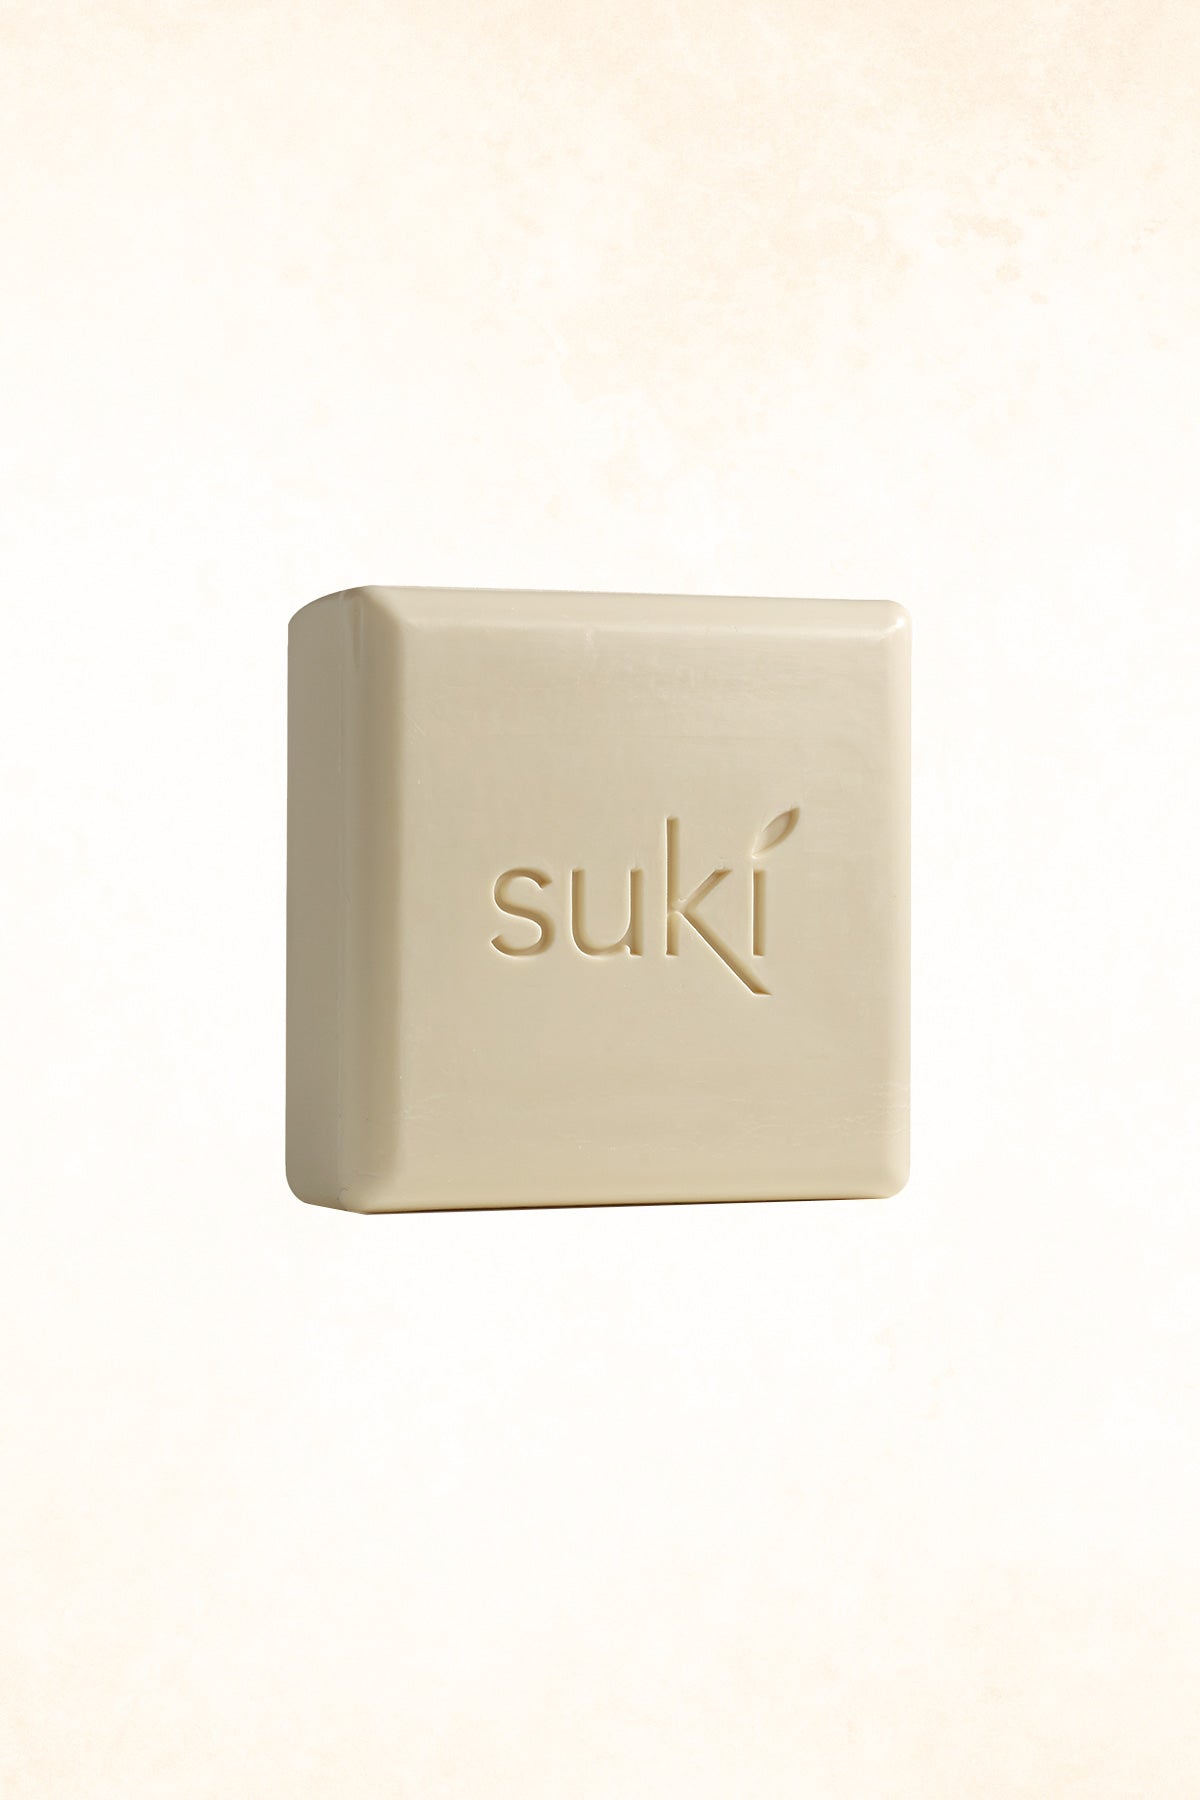 Suki - Sensitive Cleansing Bar